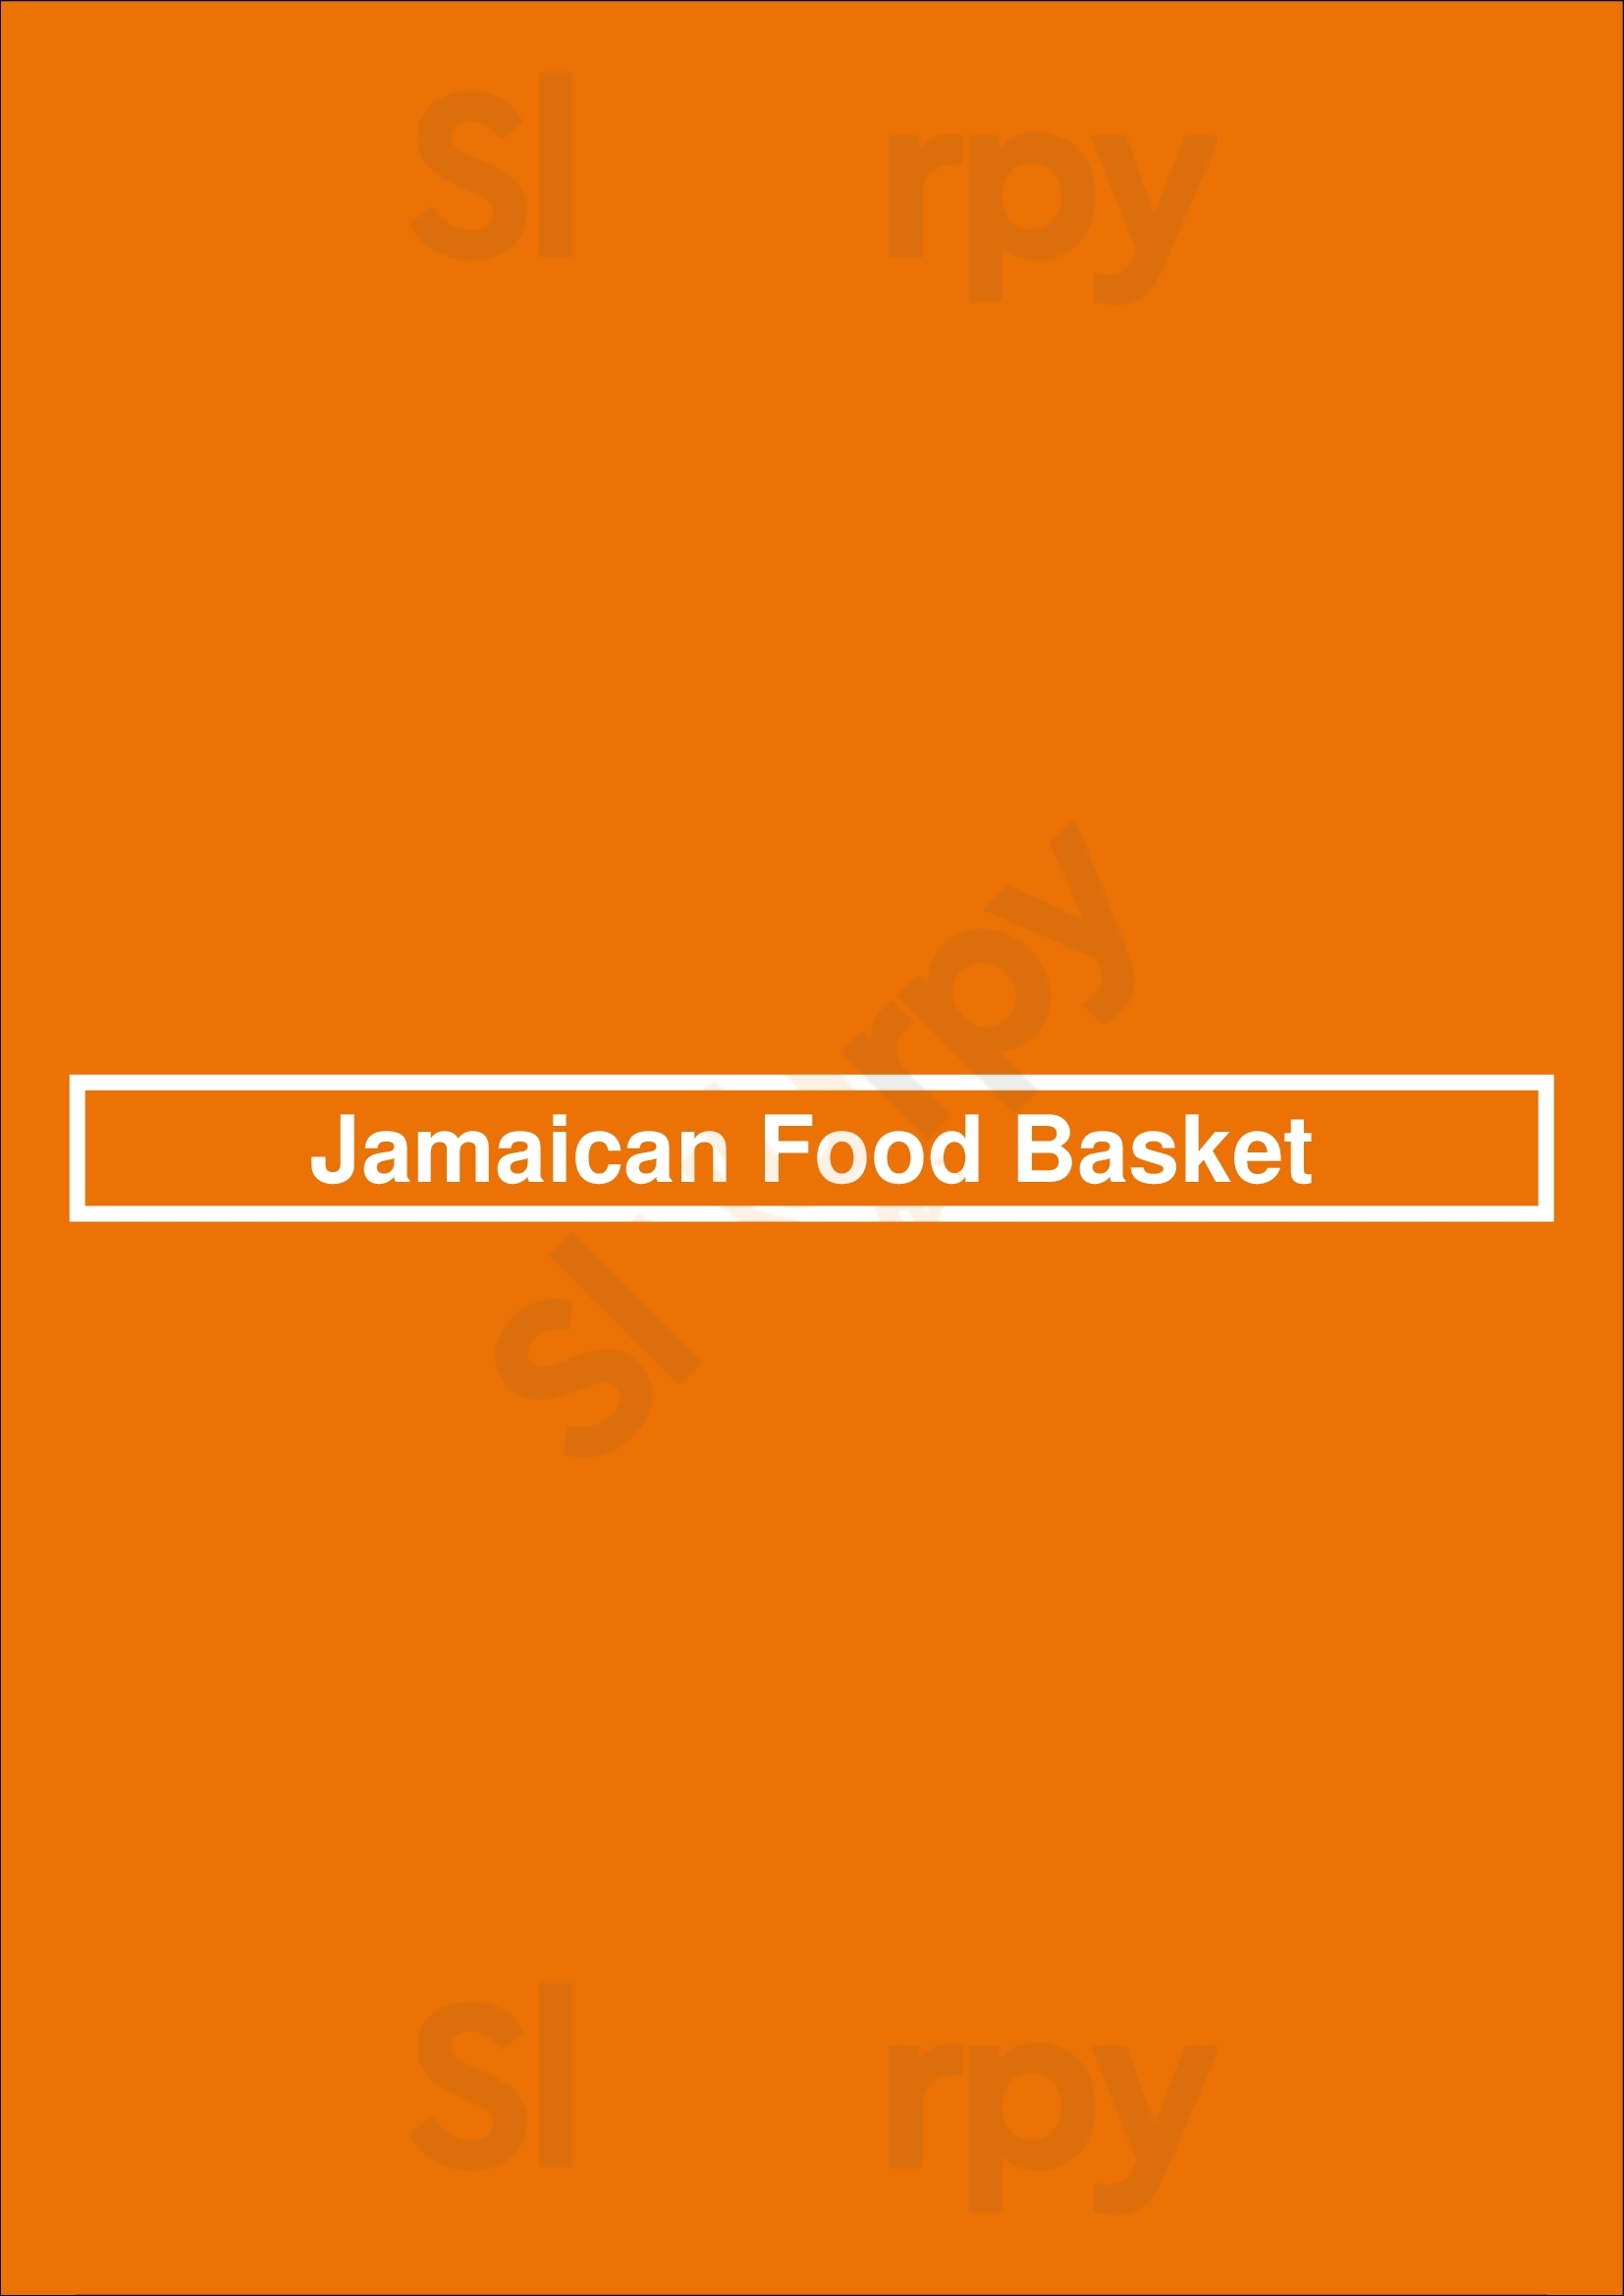 Jamaican Food Basket Saskatoon Menu - 1